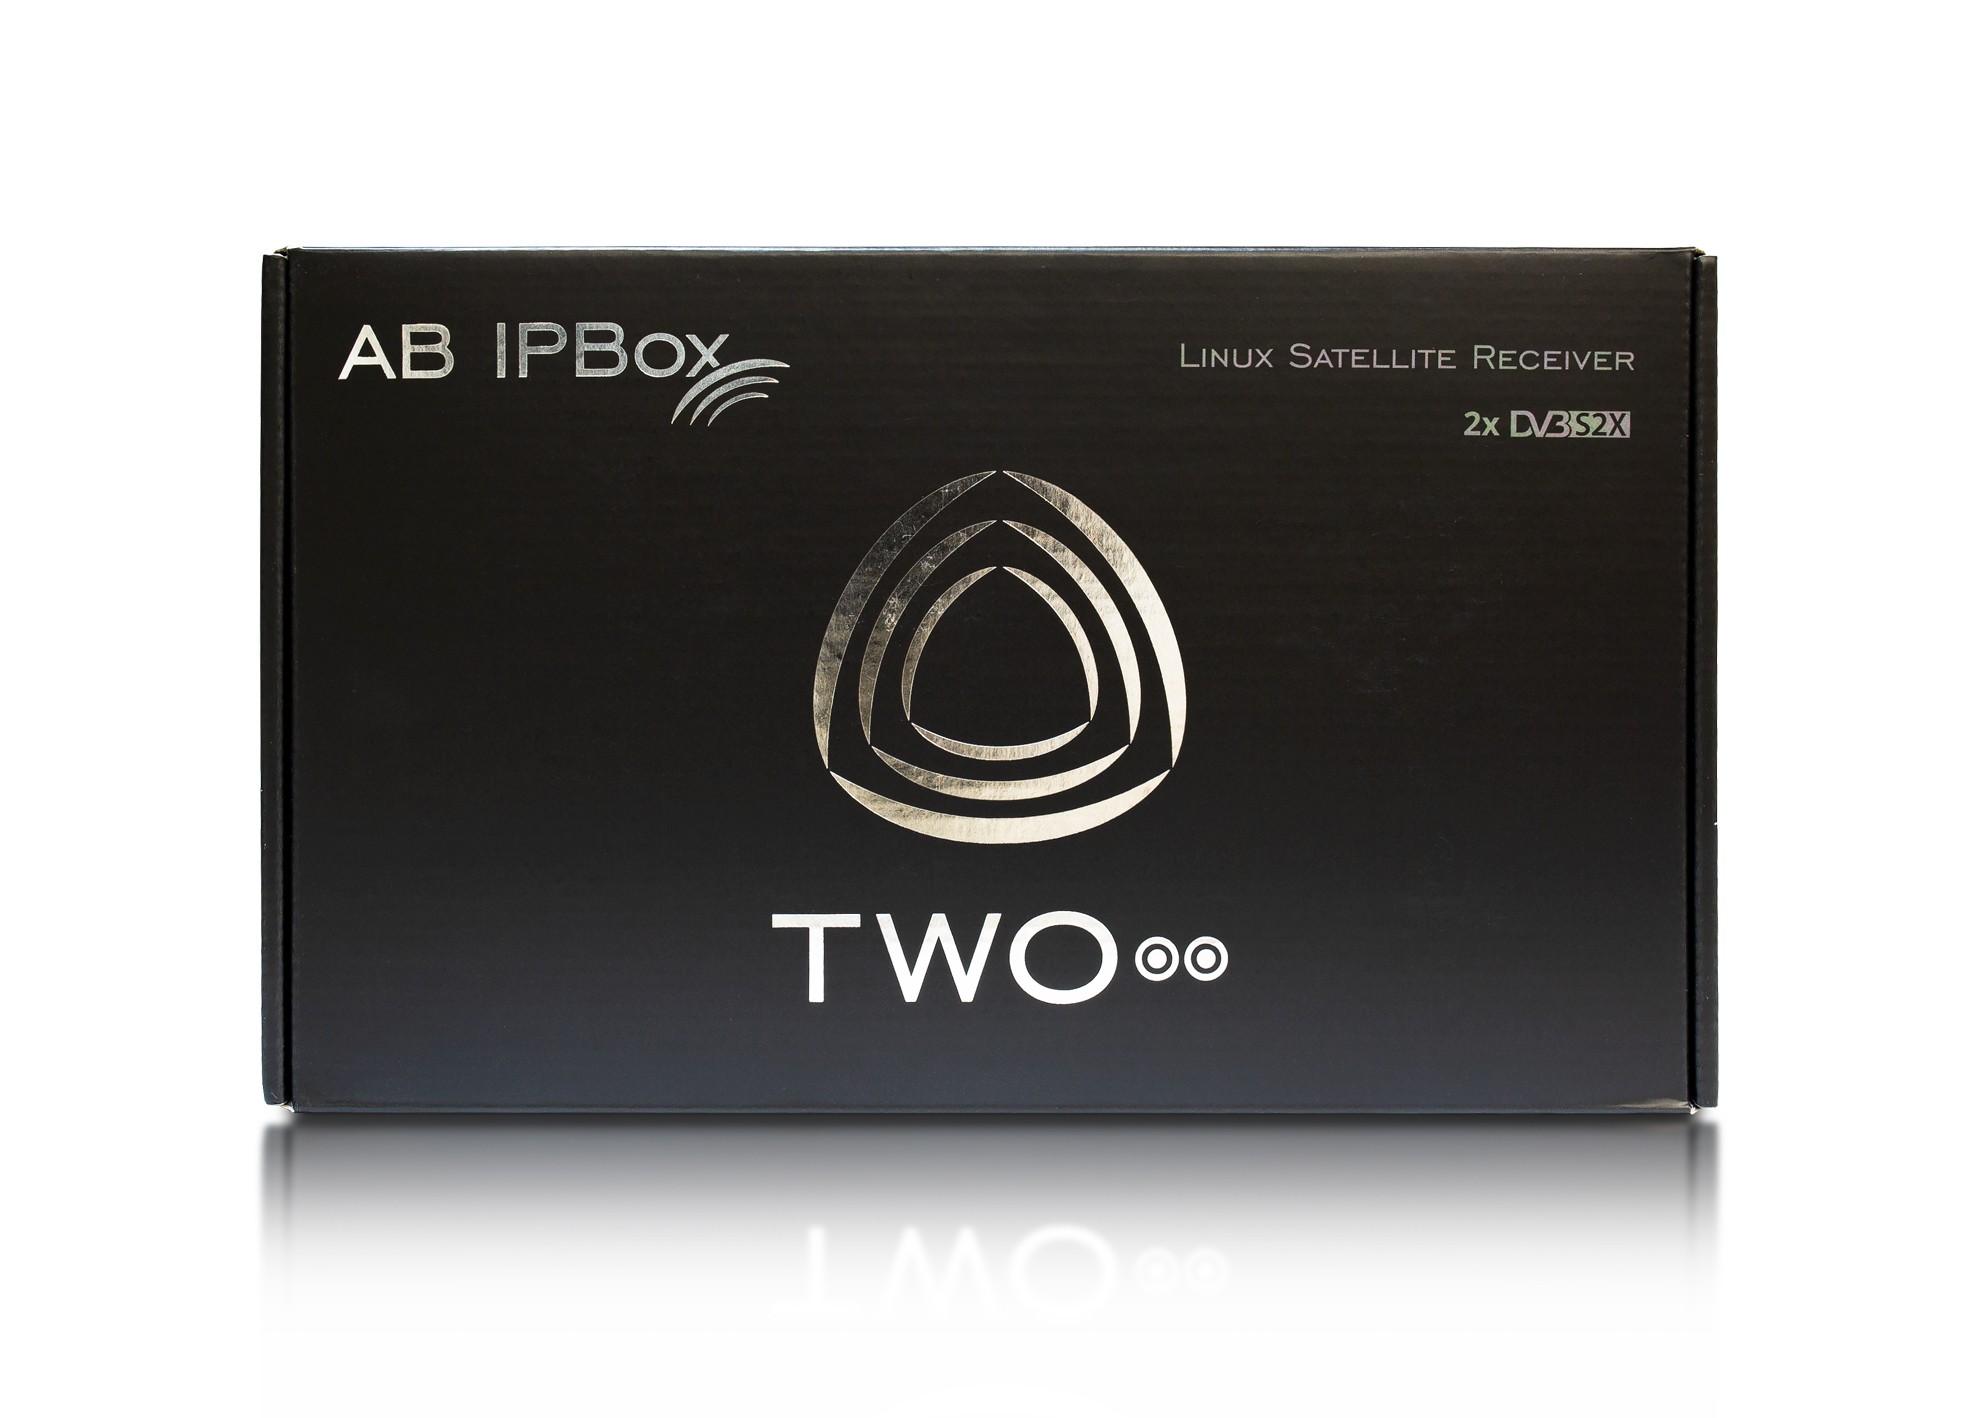 AB IPBox TWO 4K UHD Android 8.0 Sat IP-Receiver (2x DVB-S2X, Dual-WiFi, LAN, CA, Bluetooth, HDMI)